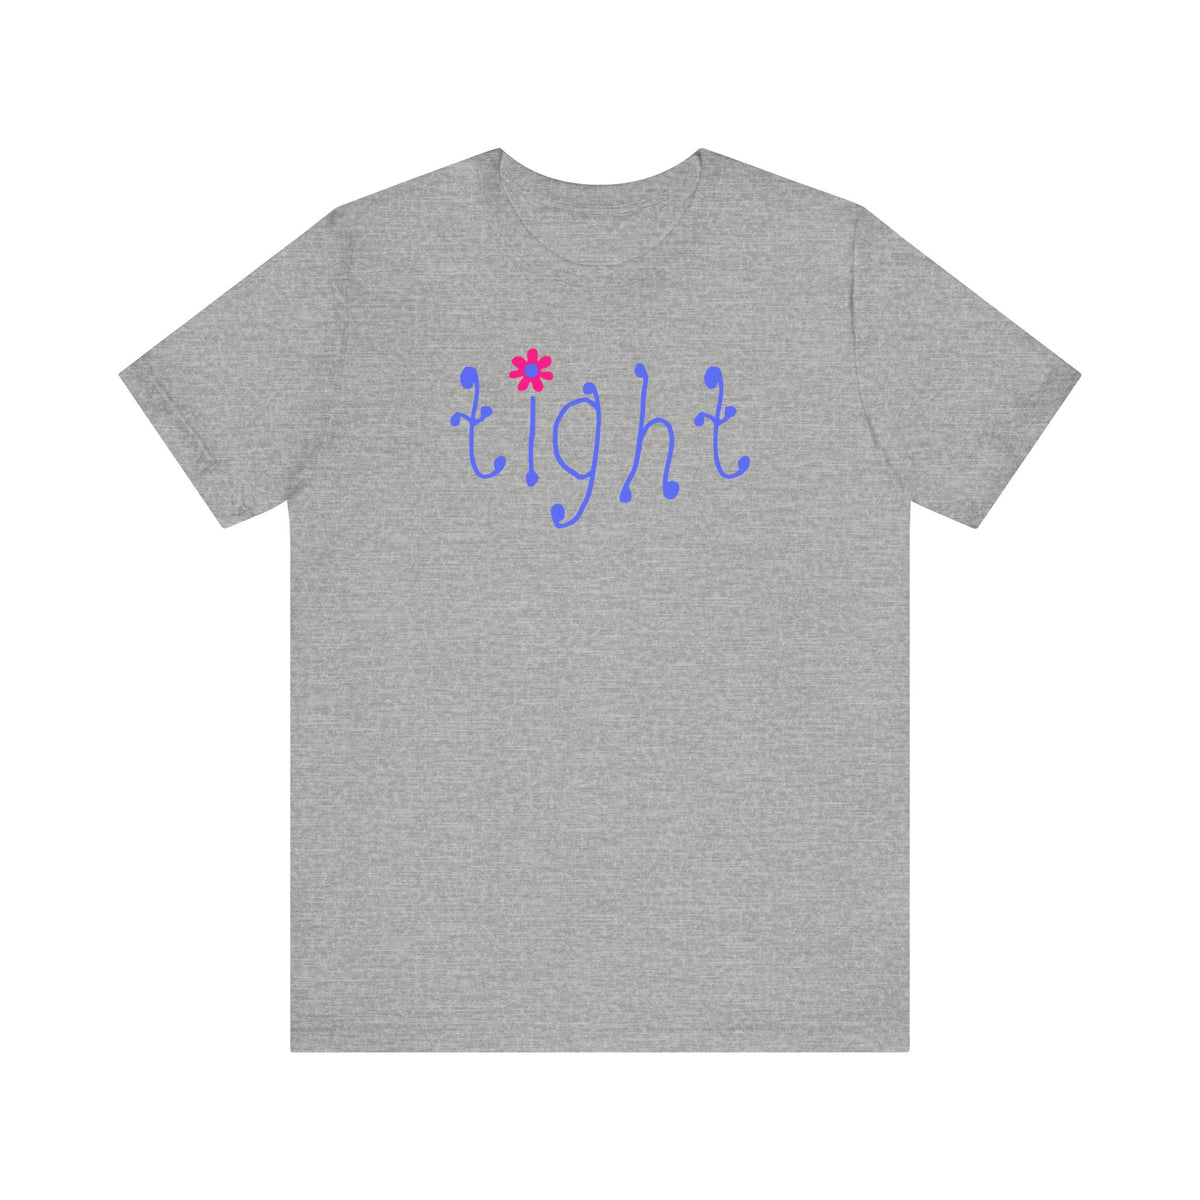 Tight - Men's T-Shirt